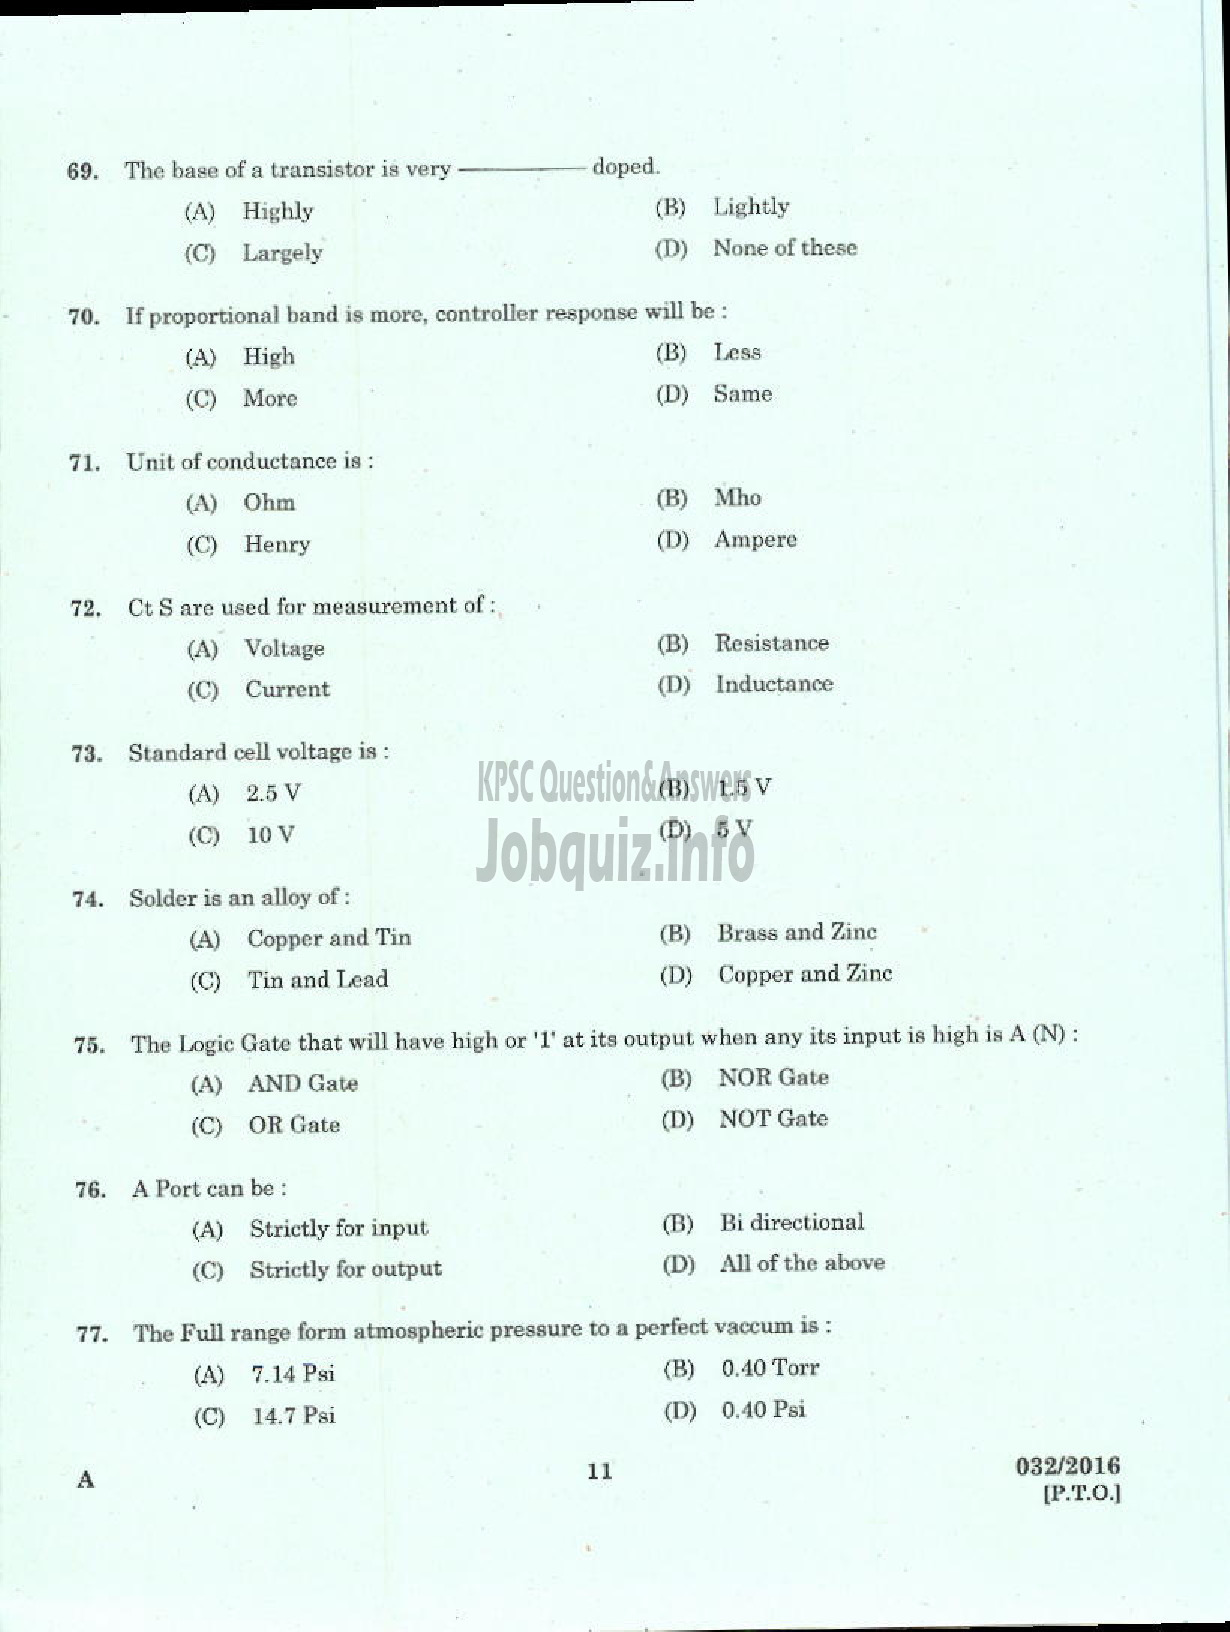 Kerala PSC Question Paper - TRADESMAN INSTRUMENT MECHANIC TECHNICAL EDUCATION-9